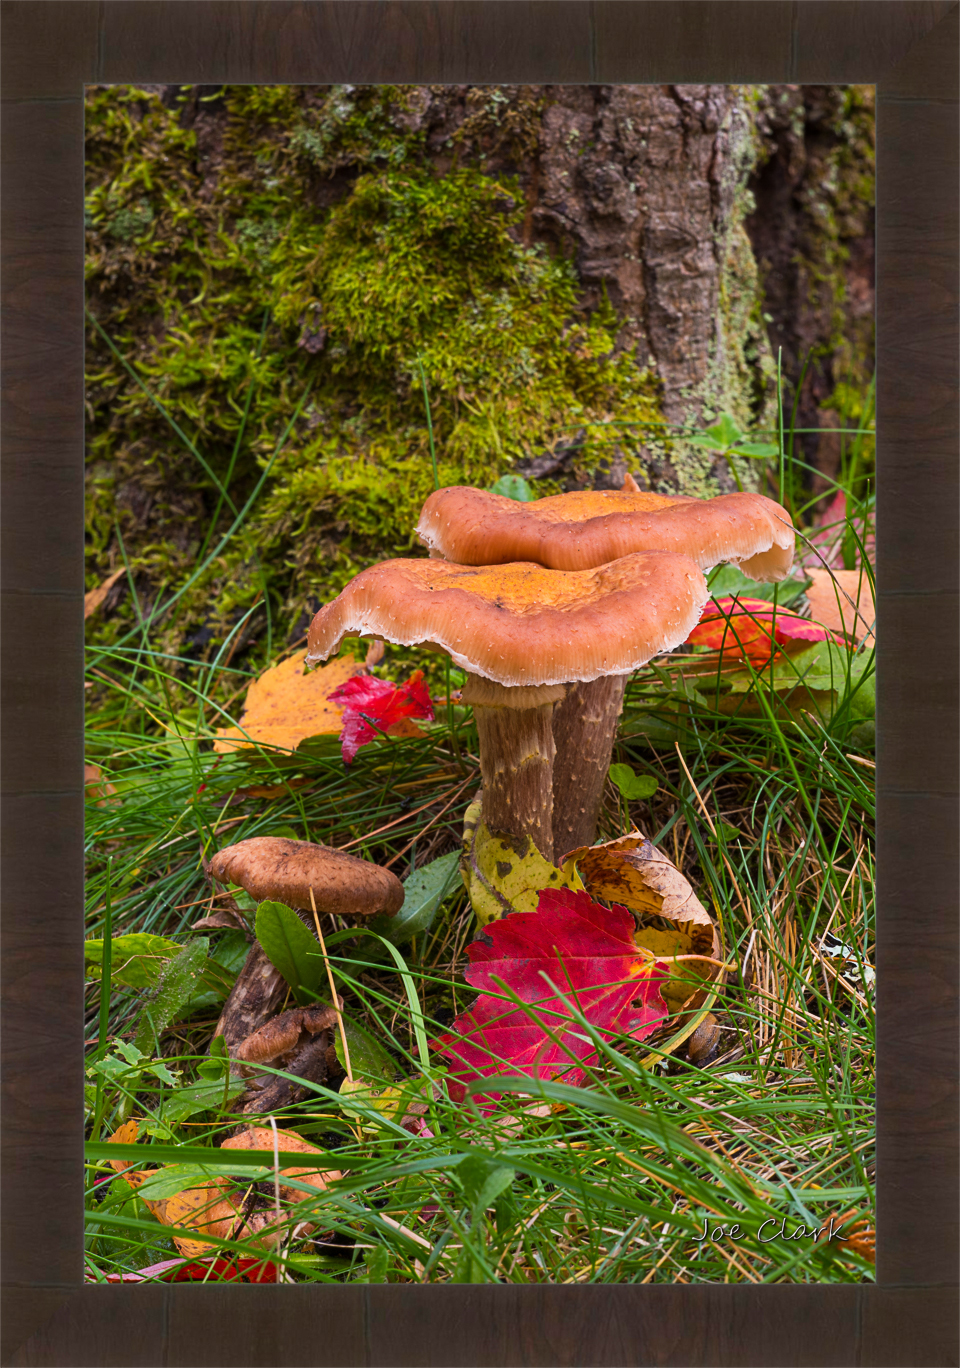 Treee Mushroom by Joe Clark R60545